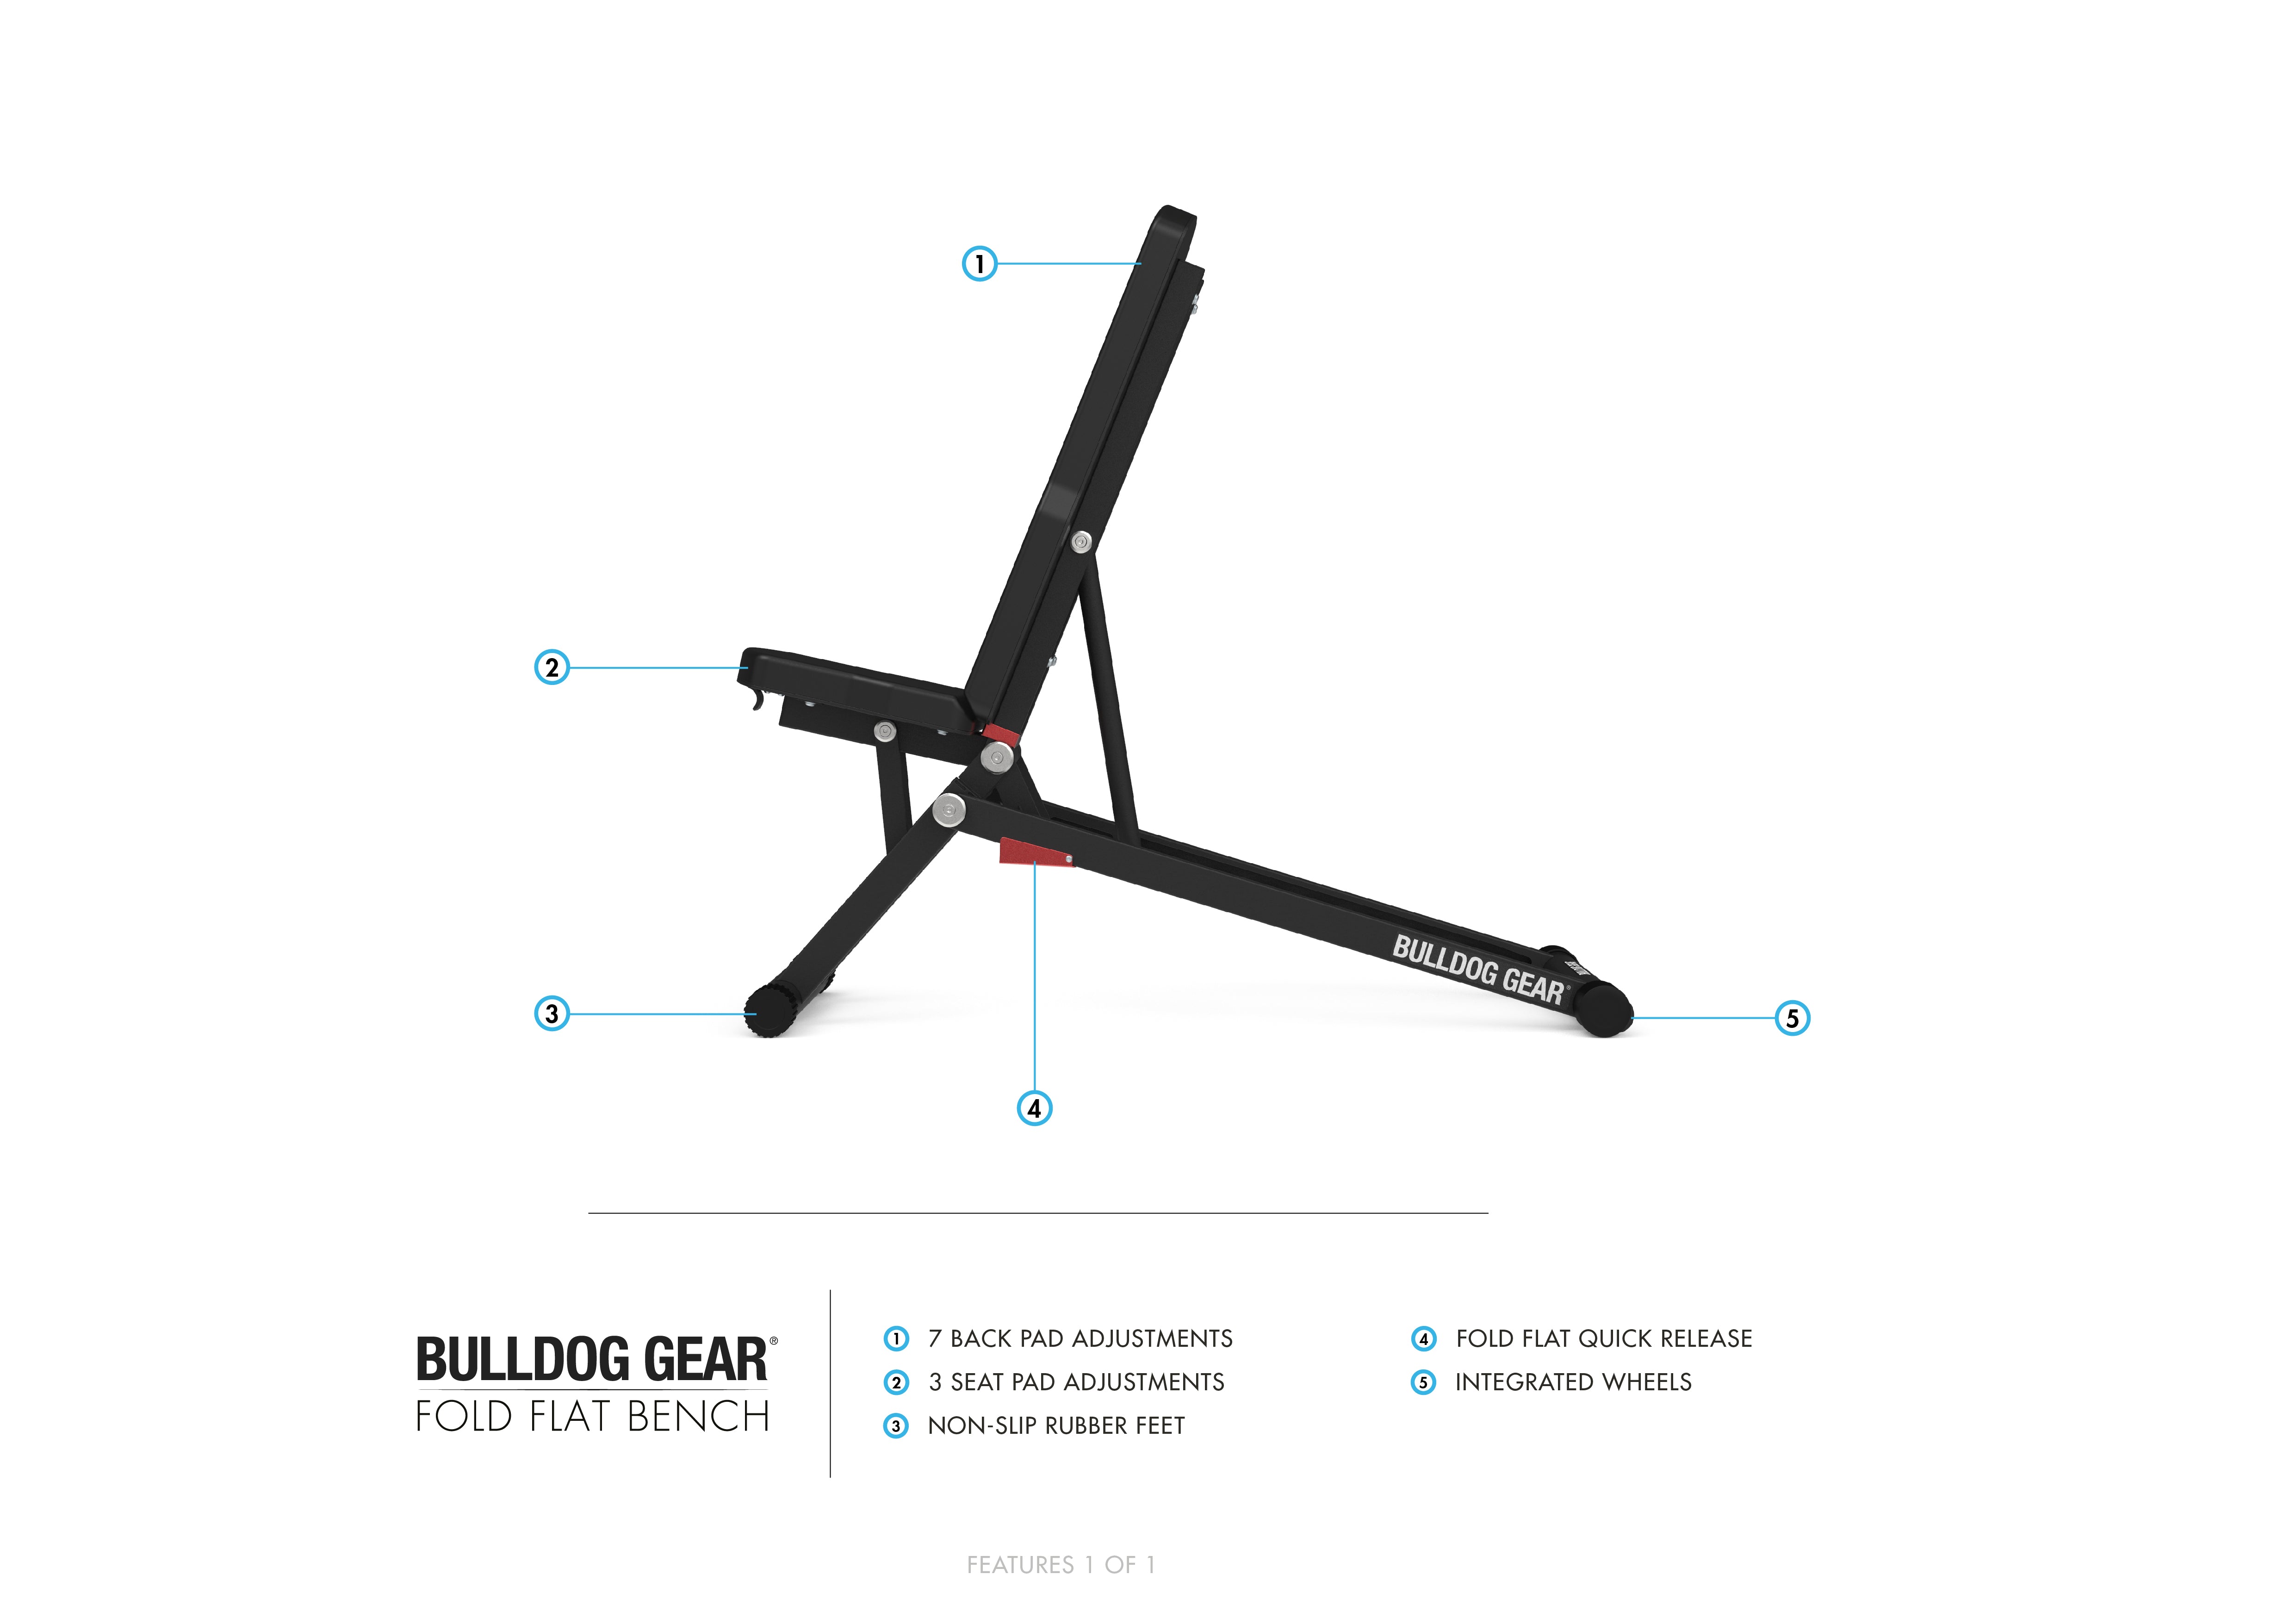 Bulldog Gear Zero Adjustable Bench - specifications